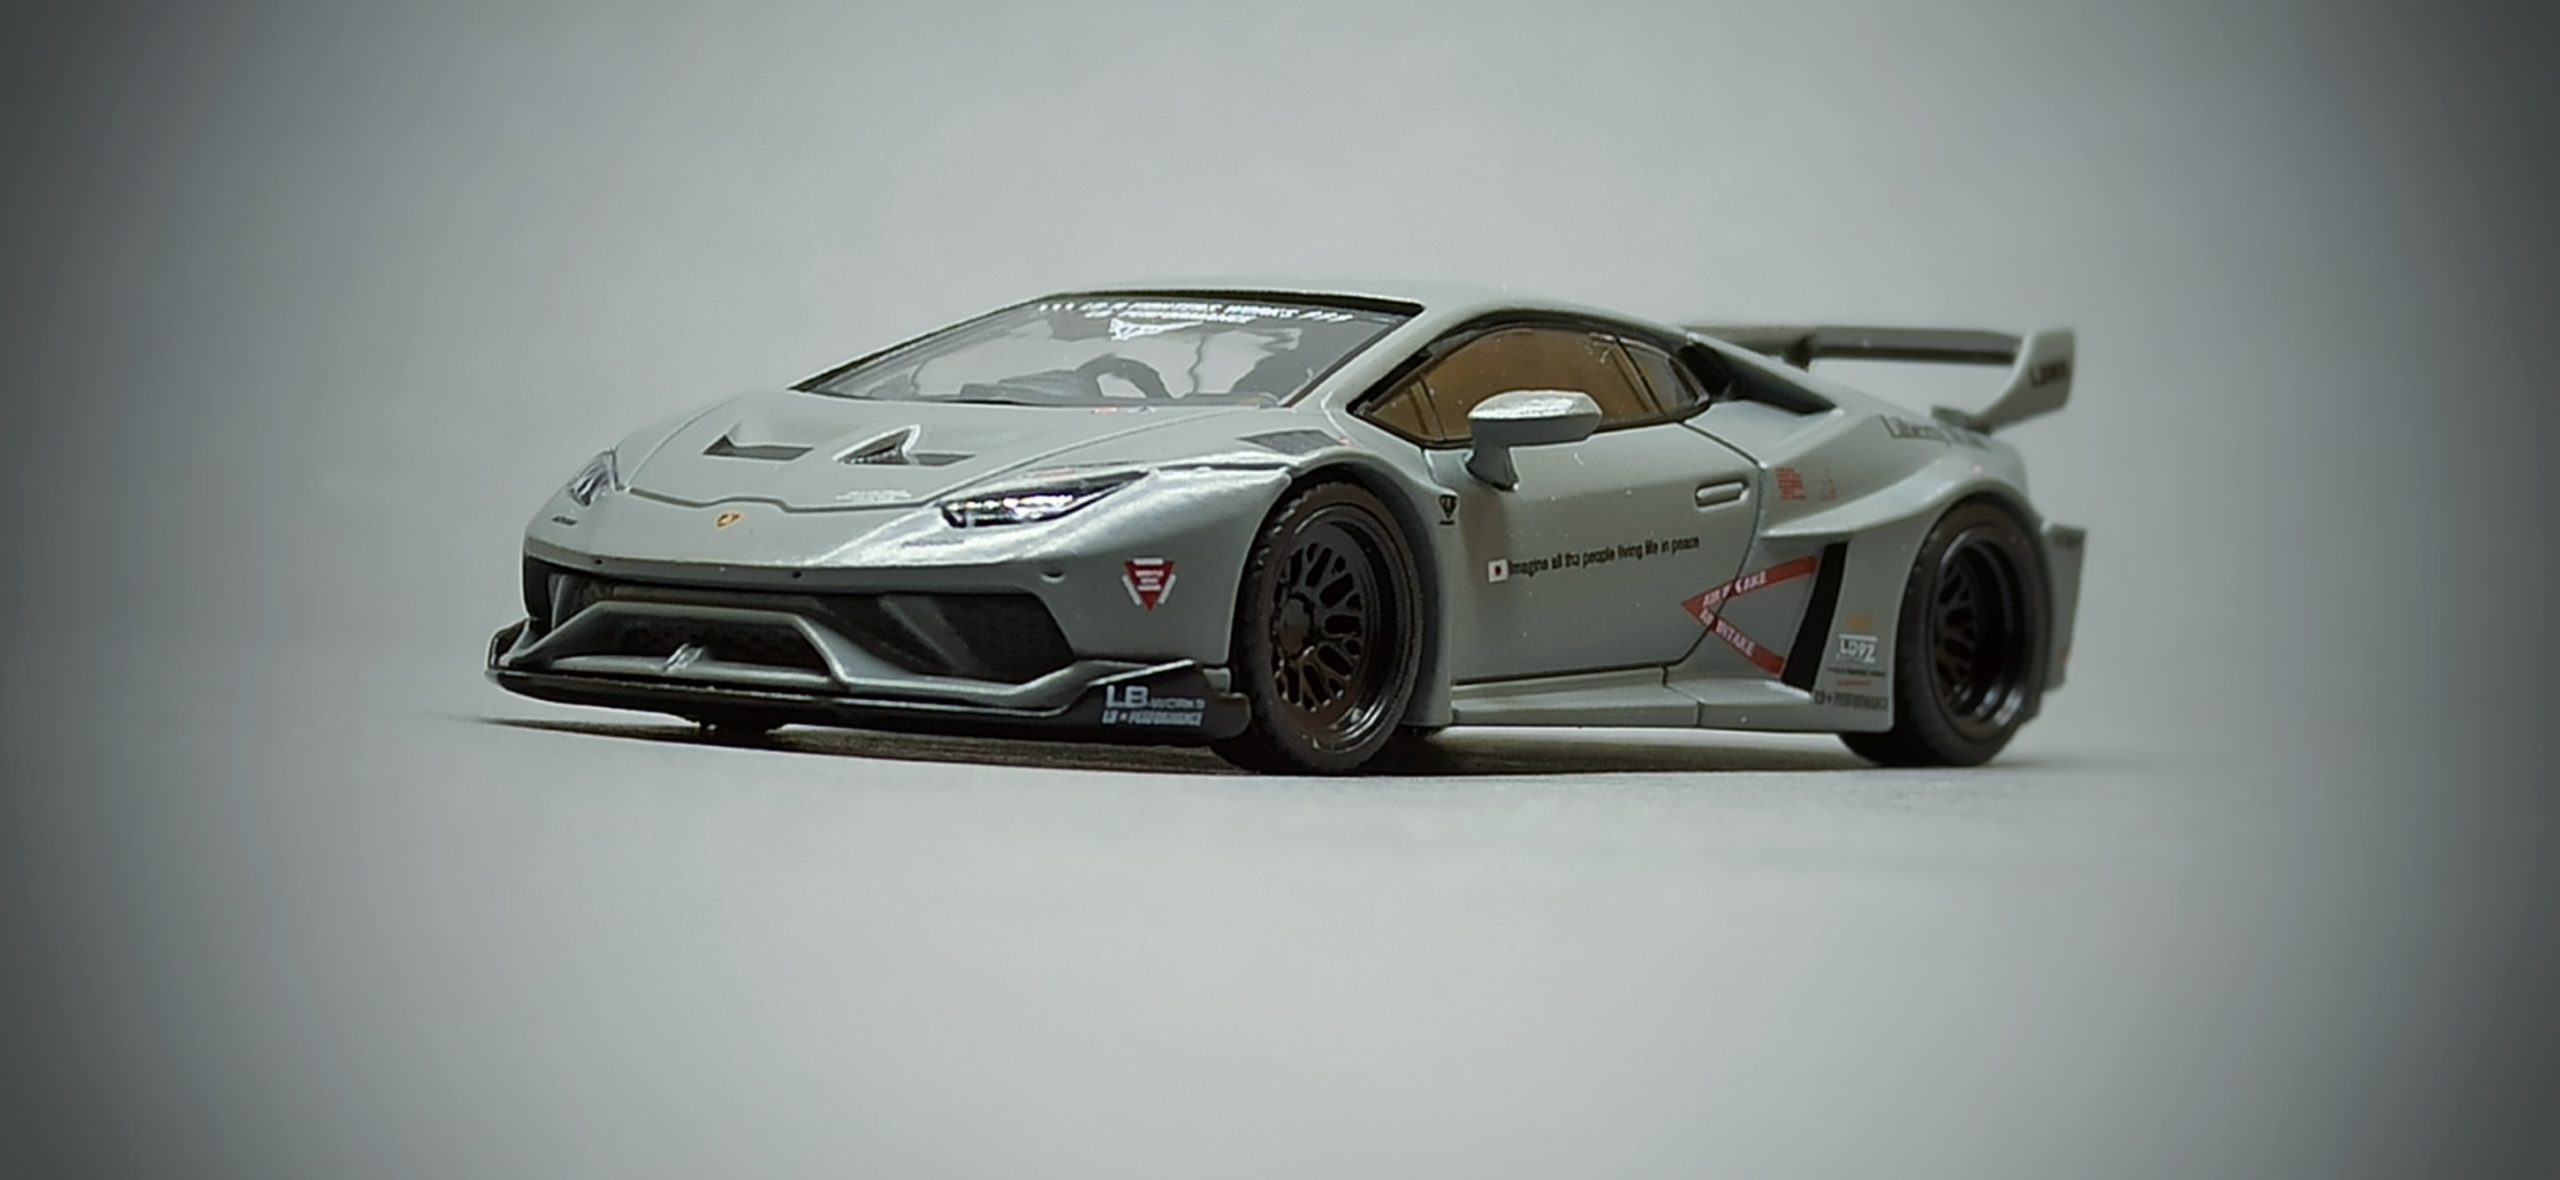 Mini GT Lamborghini Huracán (MGT00258) 2021 LB★WORKS FIGHTERS WORKS grey